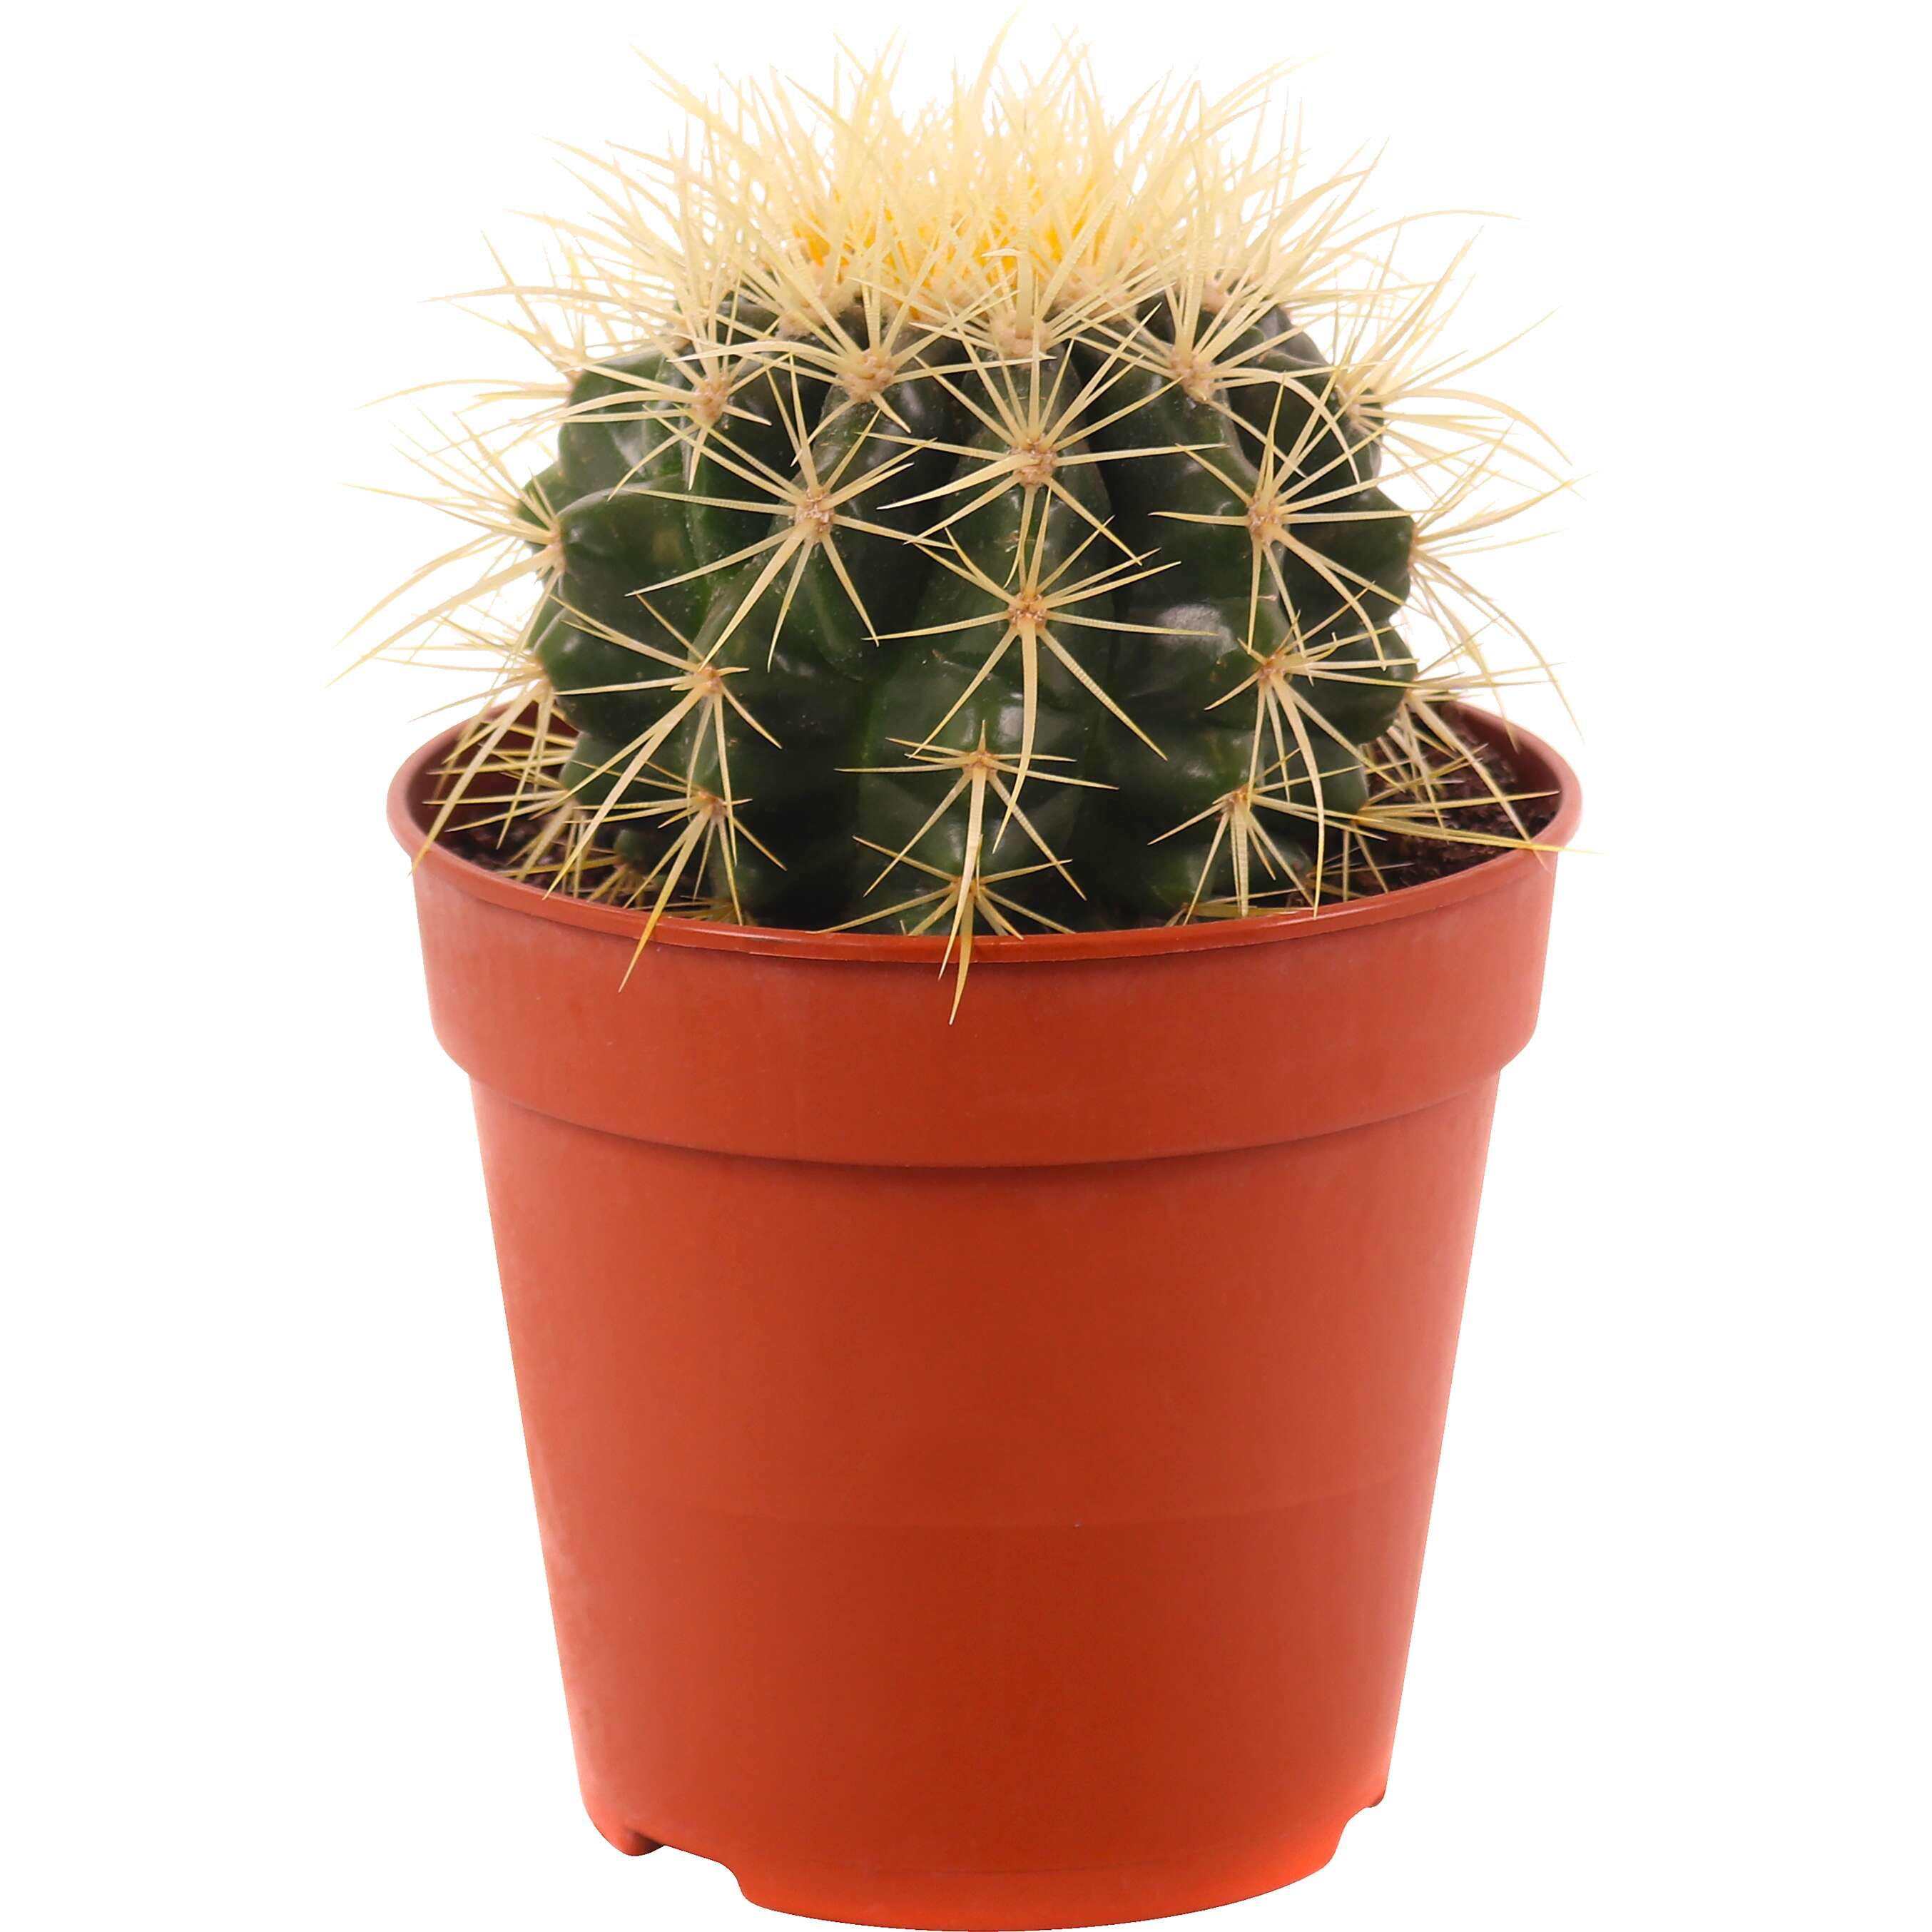 Zobrazit nabídku Kaktus Echinocactus grusonii 